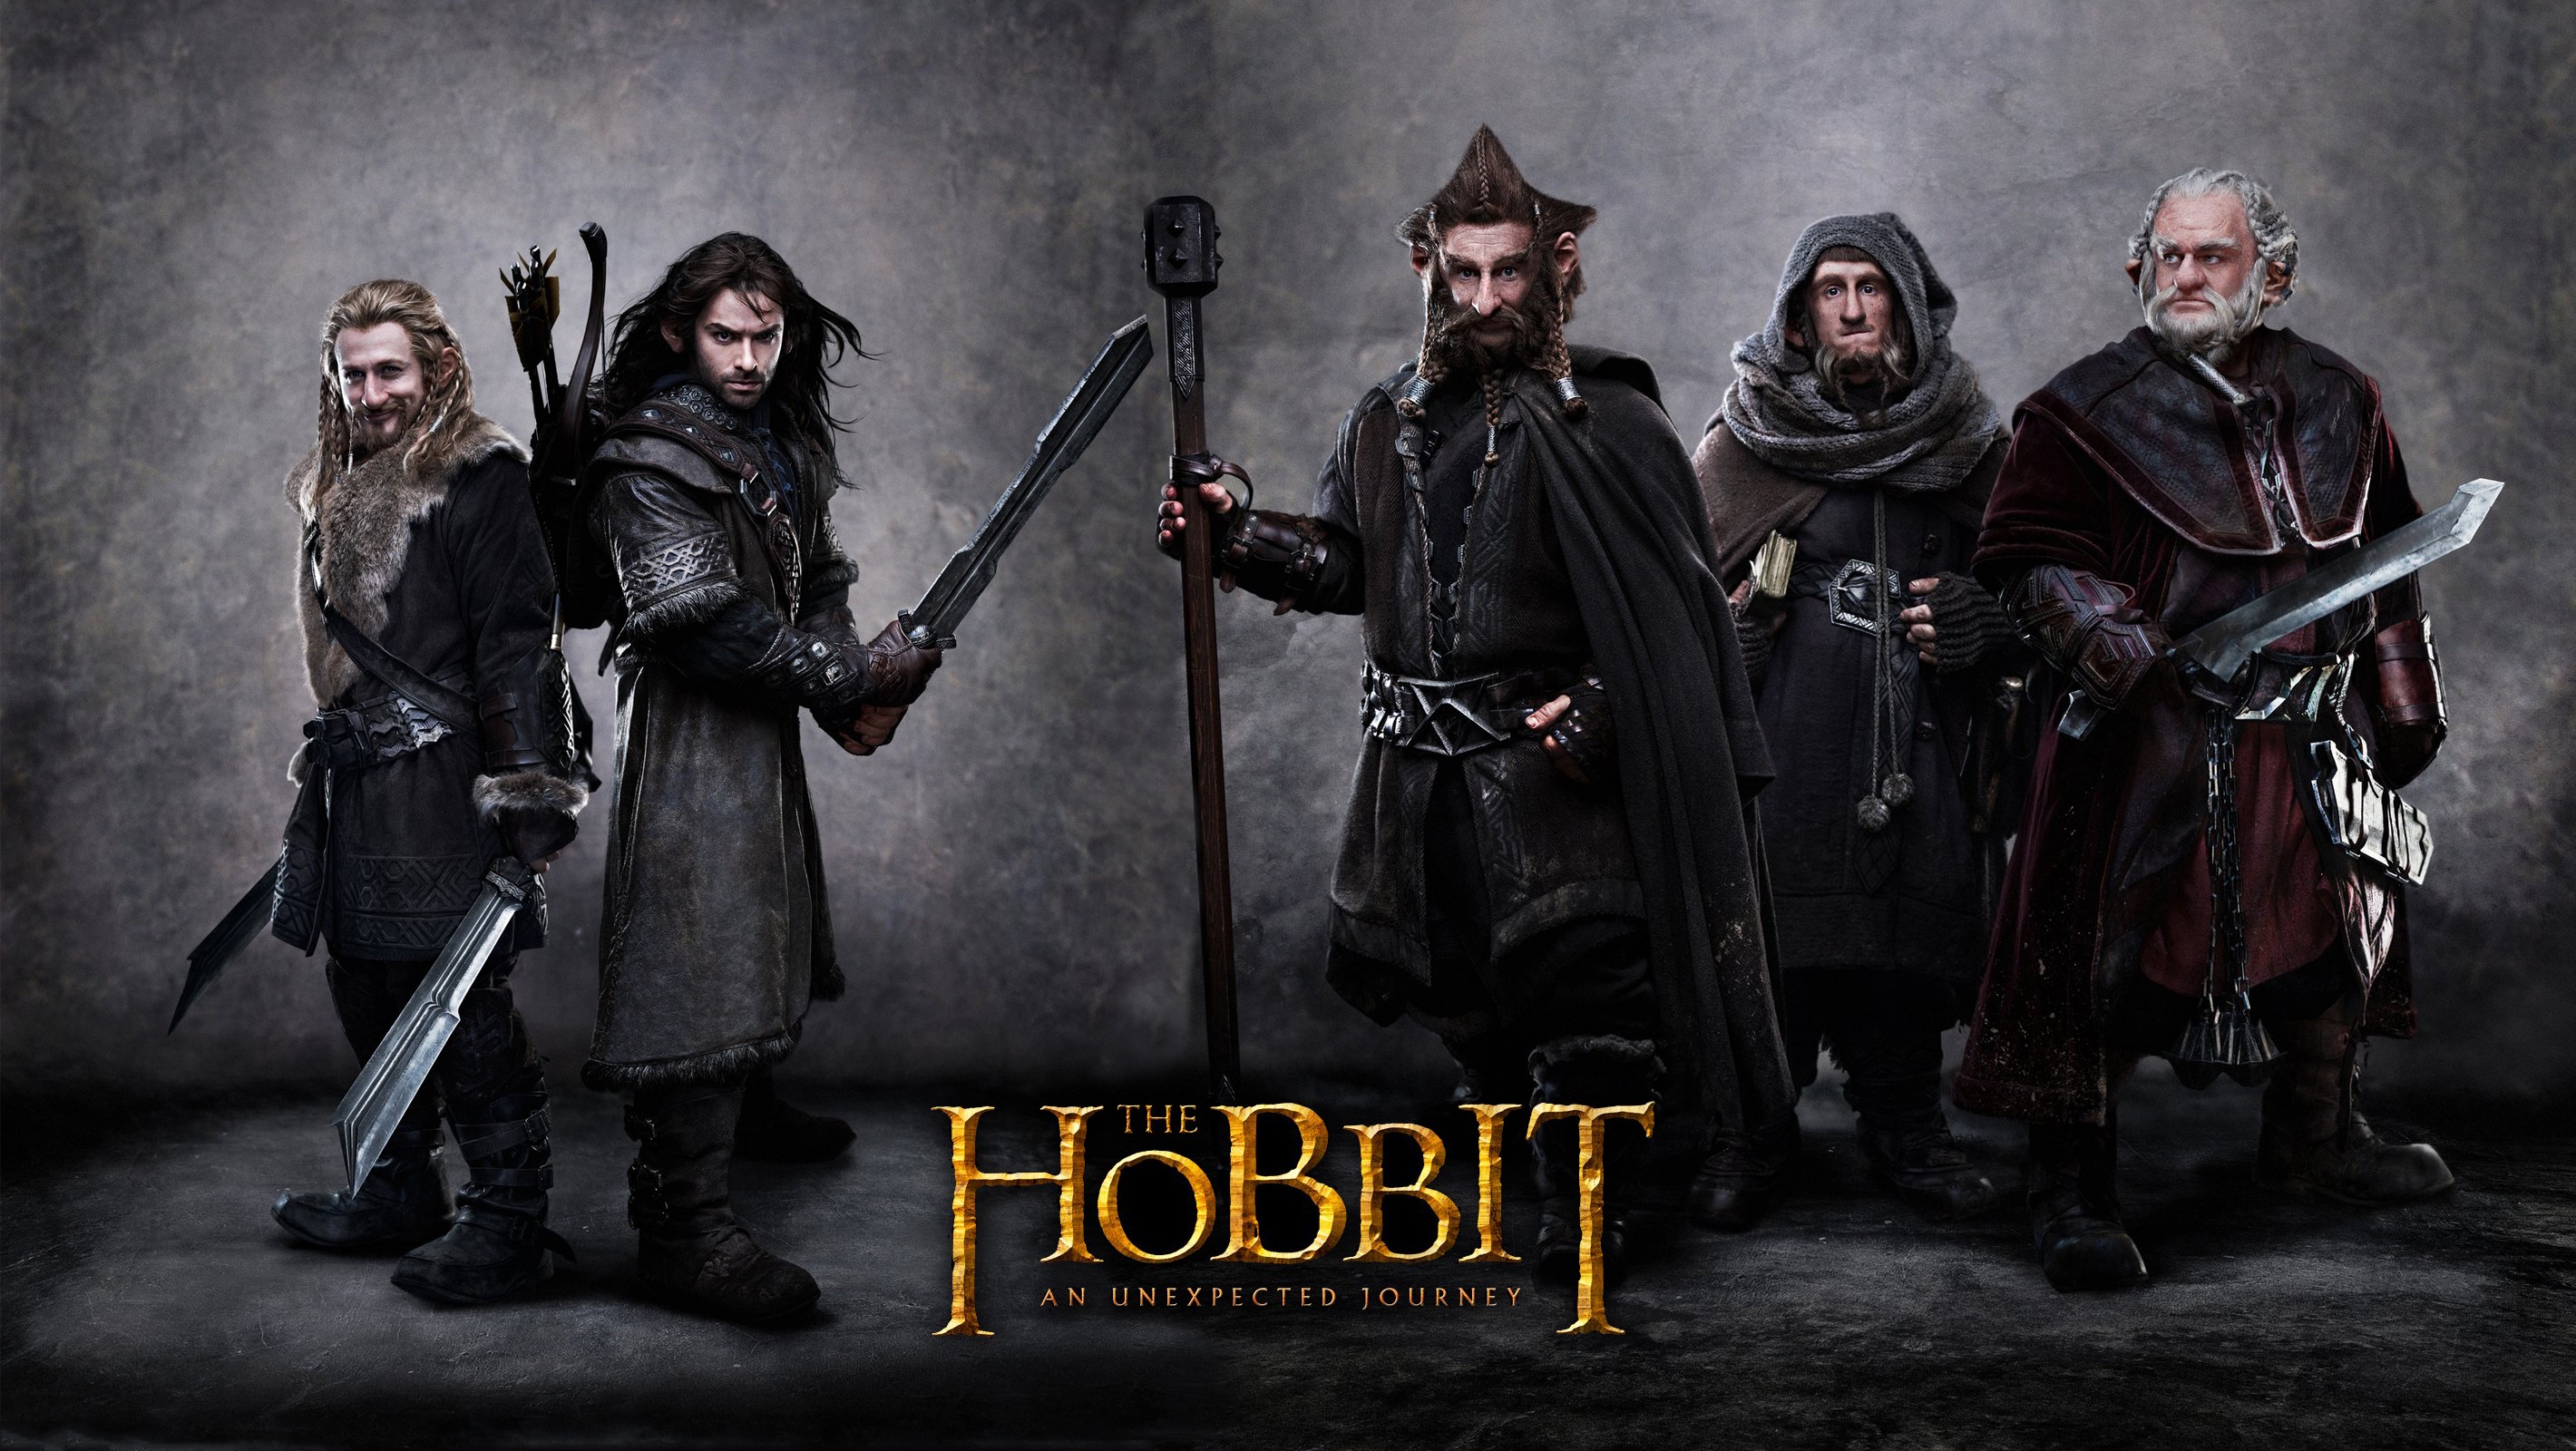 fantasy, movies, film, dwarfs, The Hobbit, movie posters, Dori, Kili